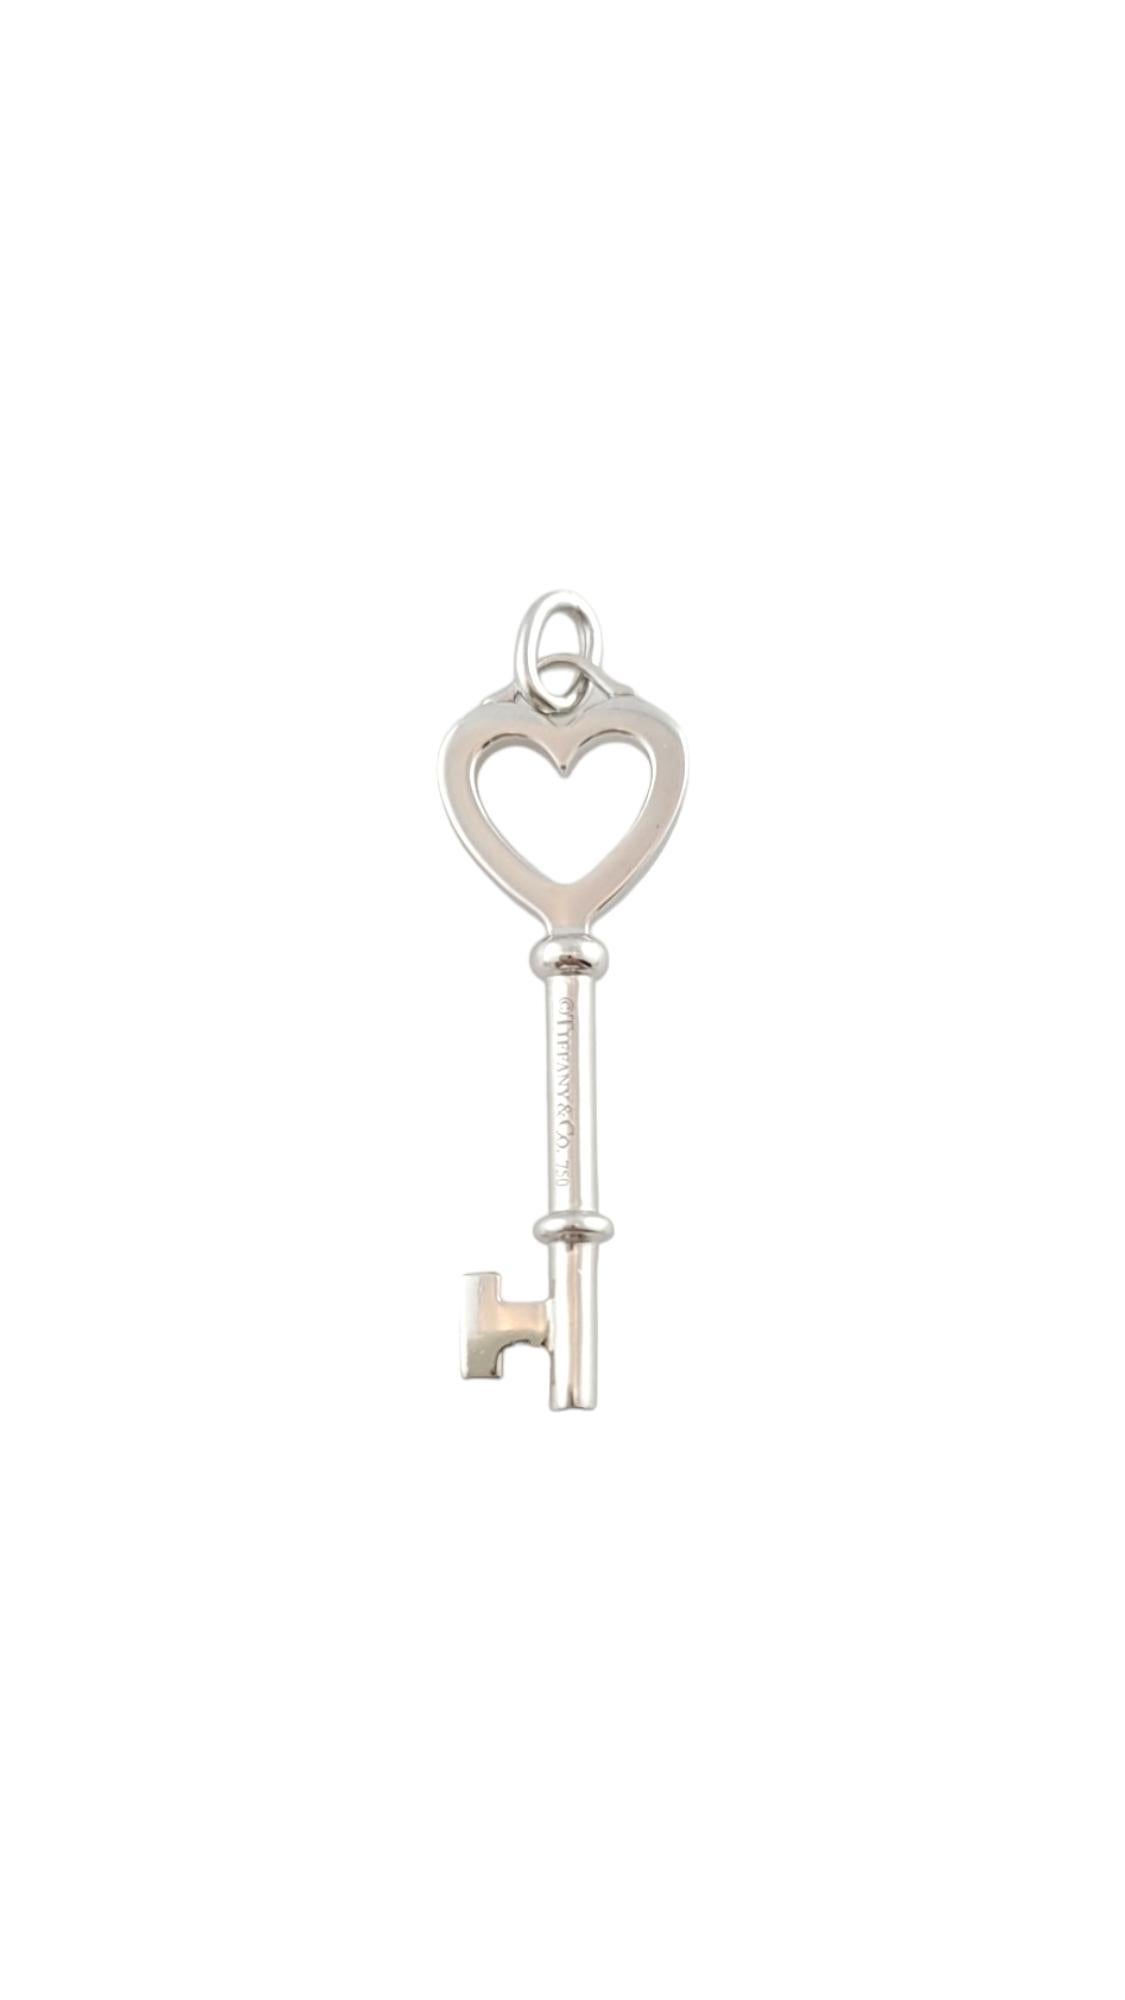 Brilliant Cut Tiffany & Co. 18K White Gold Diamond Heart Key 1.5